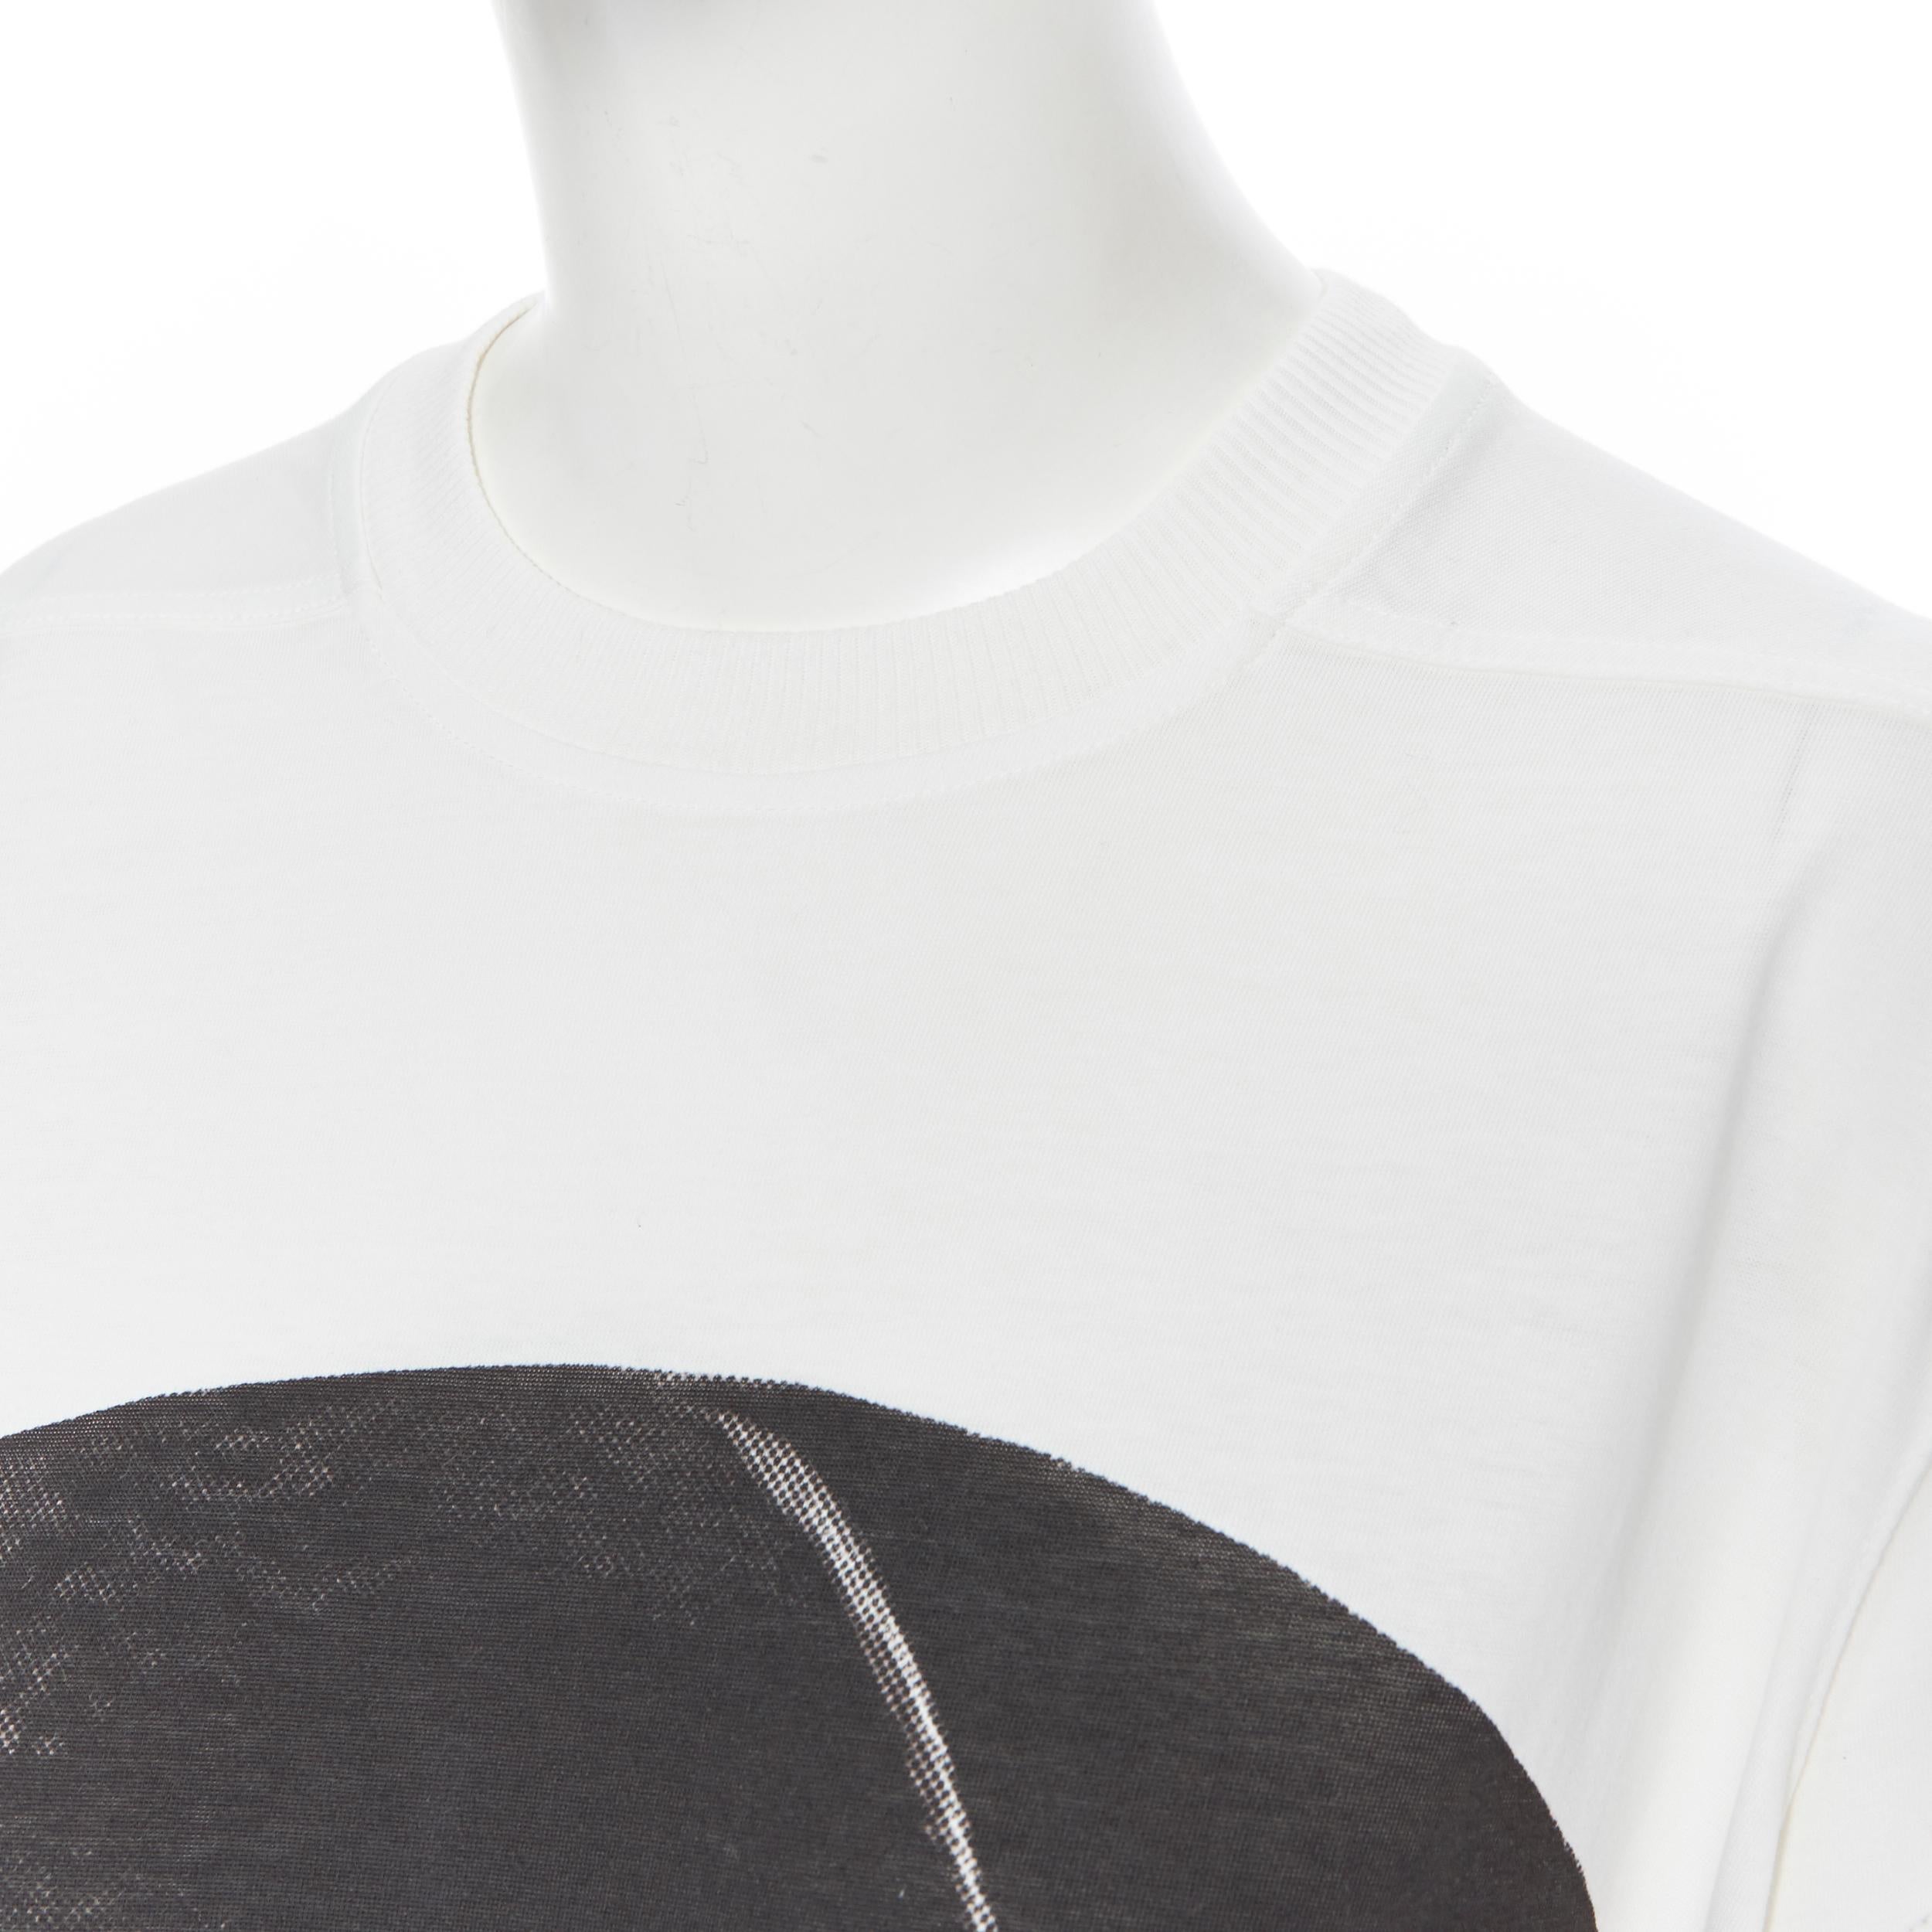 Women's new RICK OWENS DRKSHDW SS18 Dirt Jumbo white black photo print t-shirt dress OS